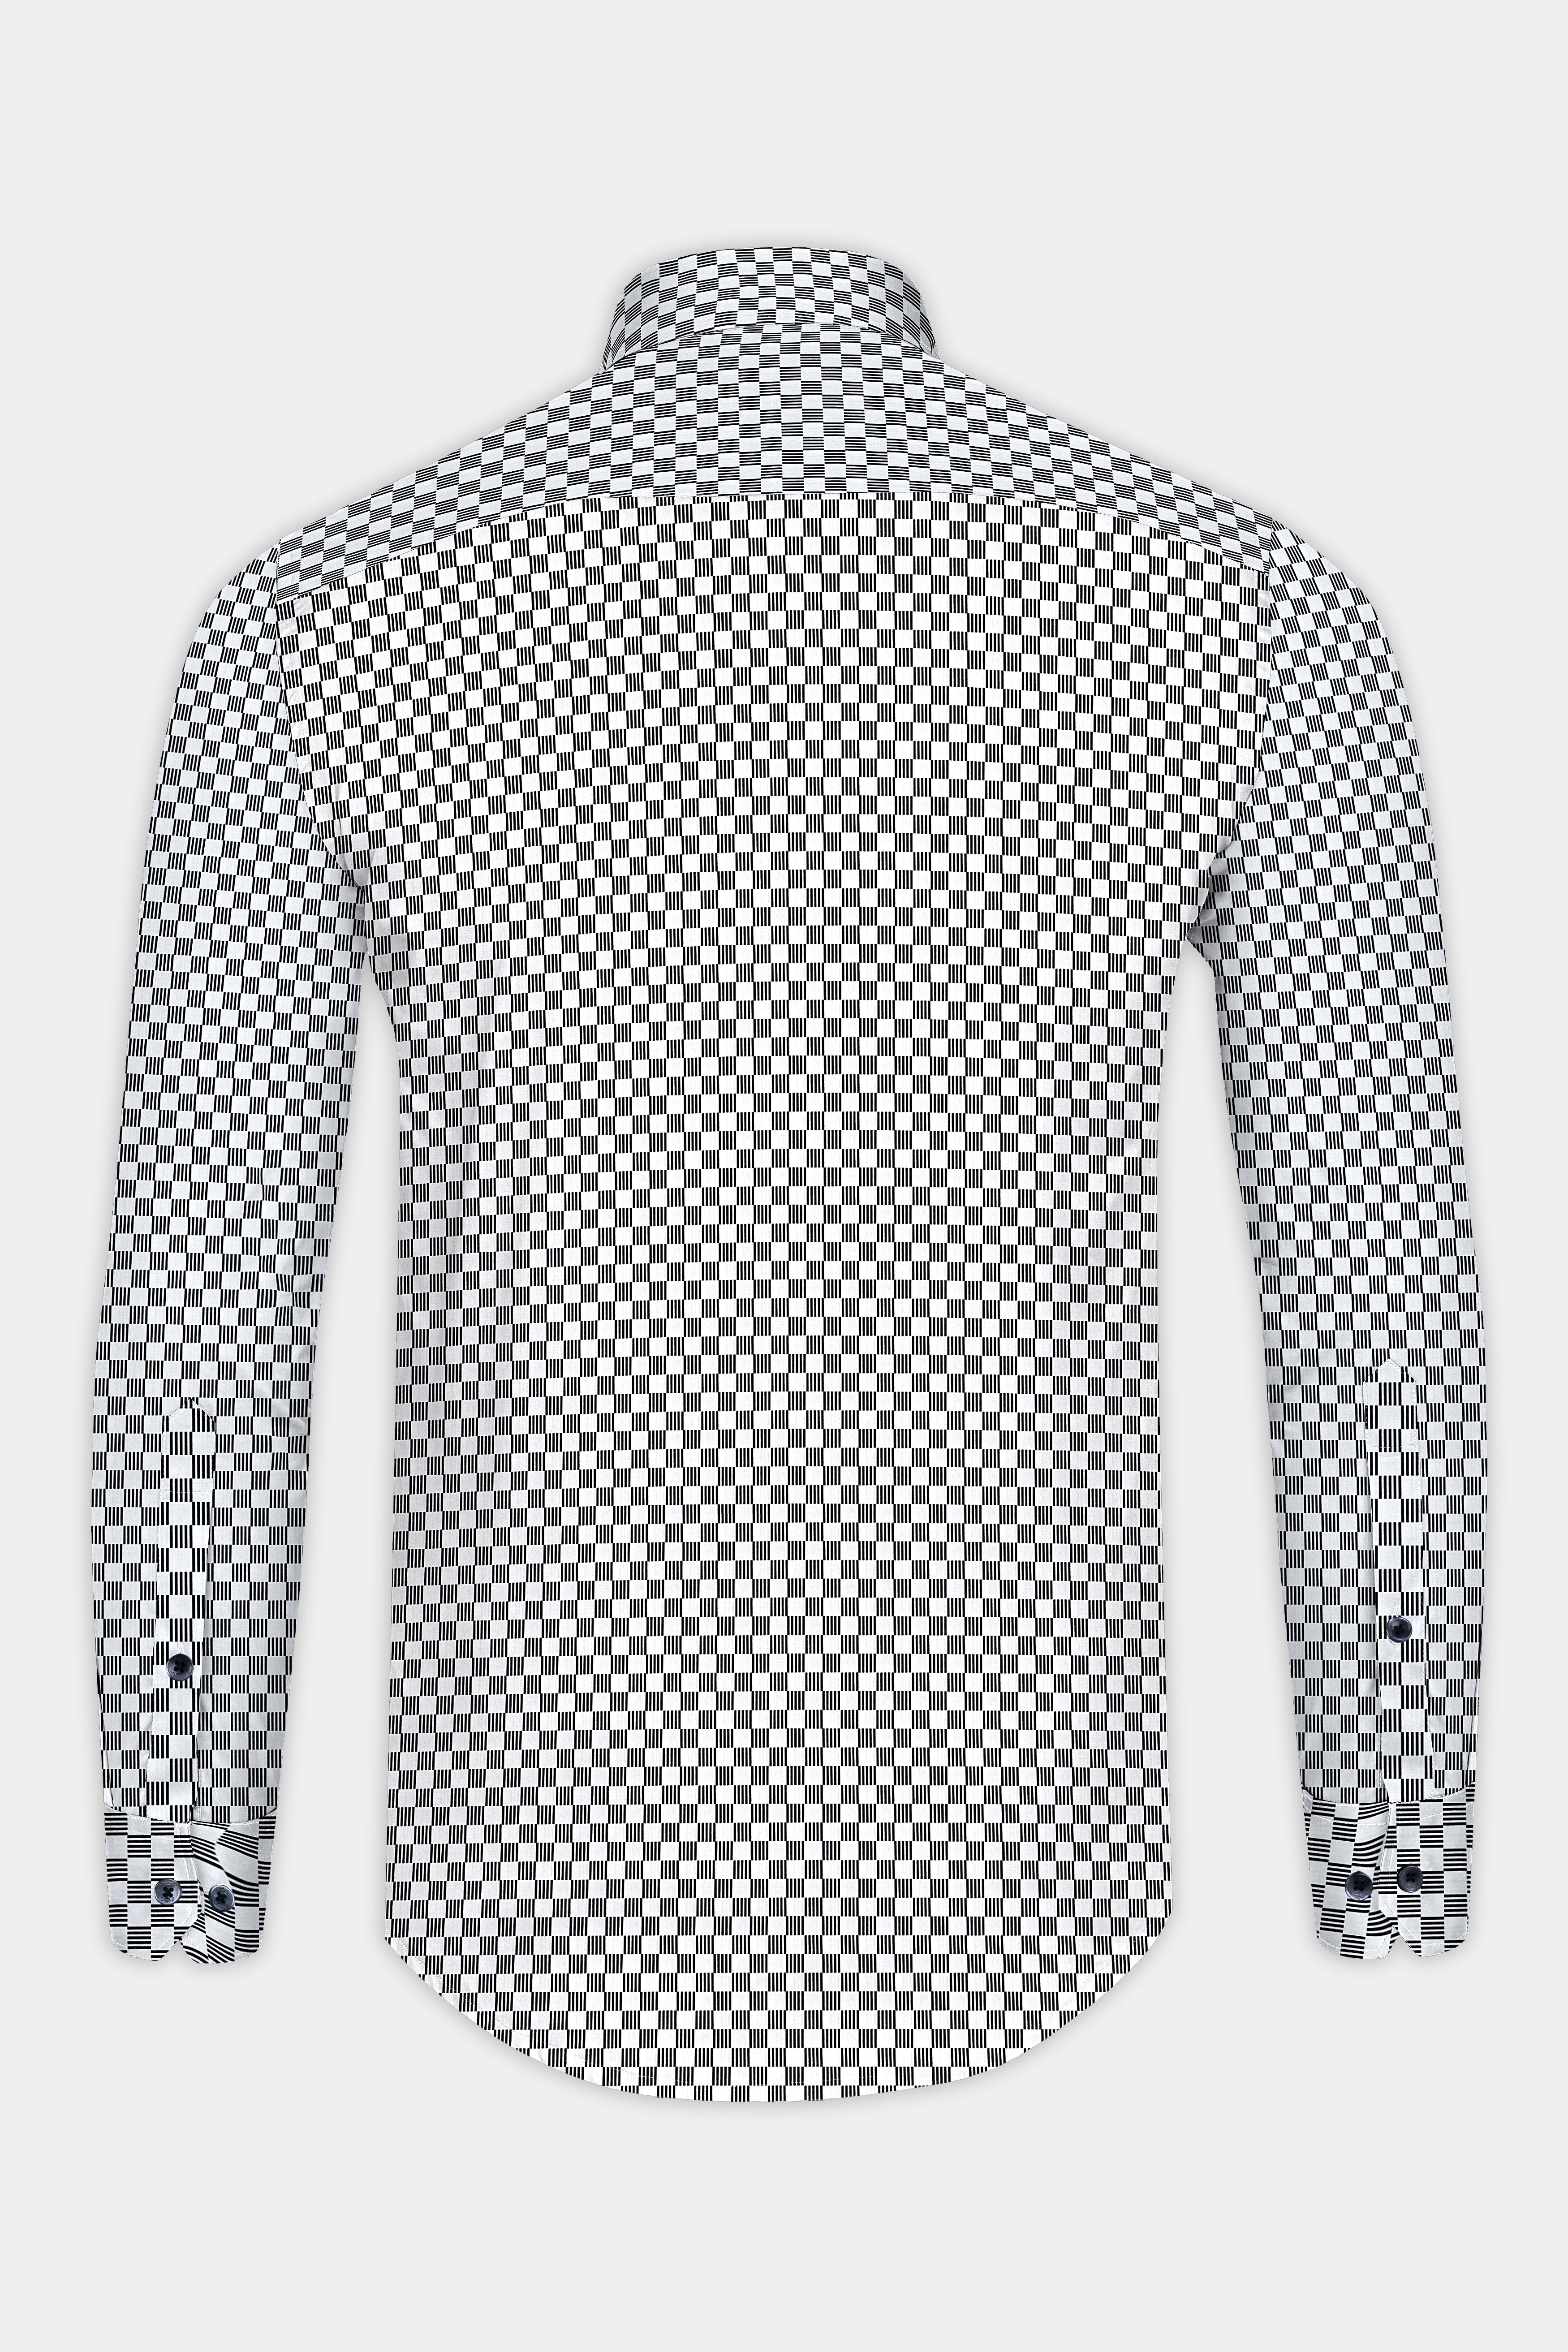 Cinder Black and Bright White Print Super Soft Premium Cotton Shirt